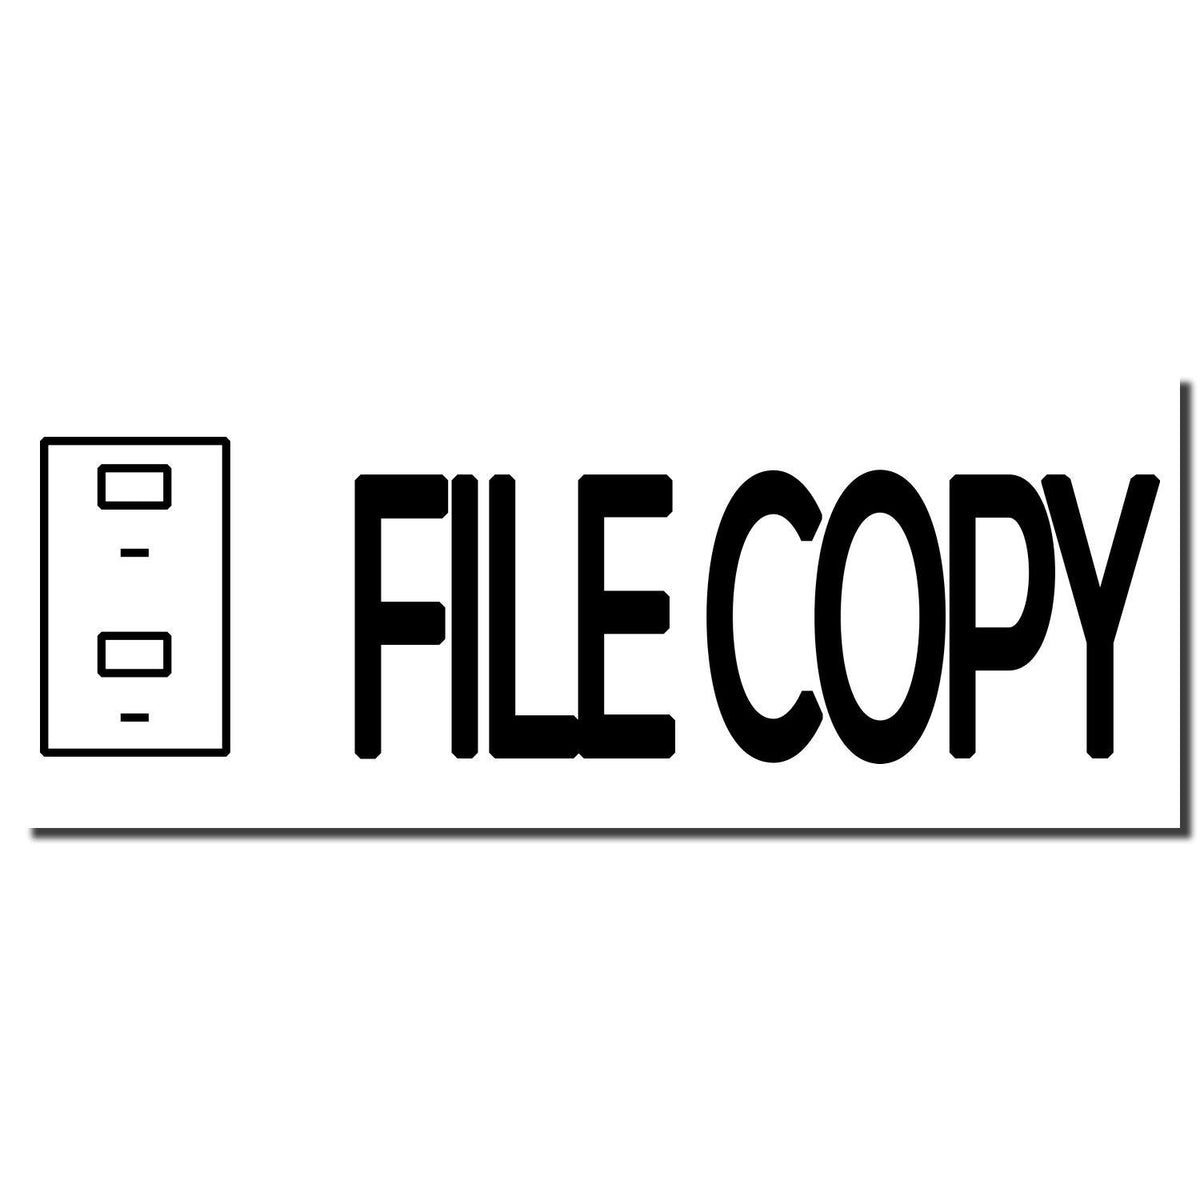 Enlarged Imprint Slim Pre-Inked File Copy with Drawer Stamp Sample